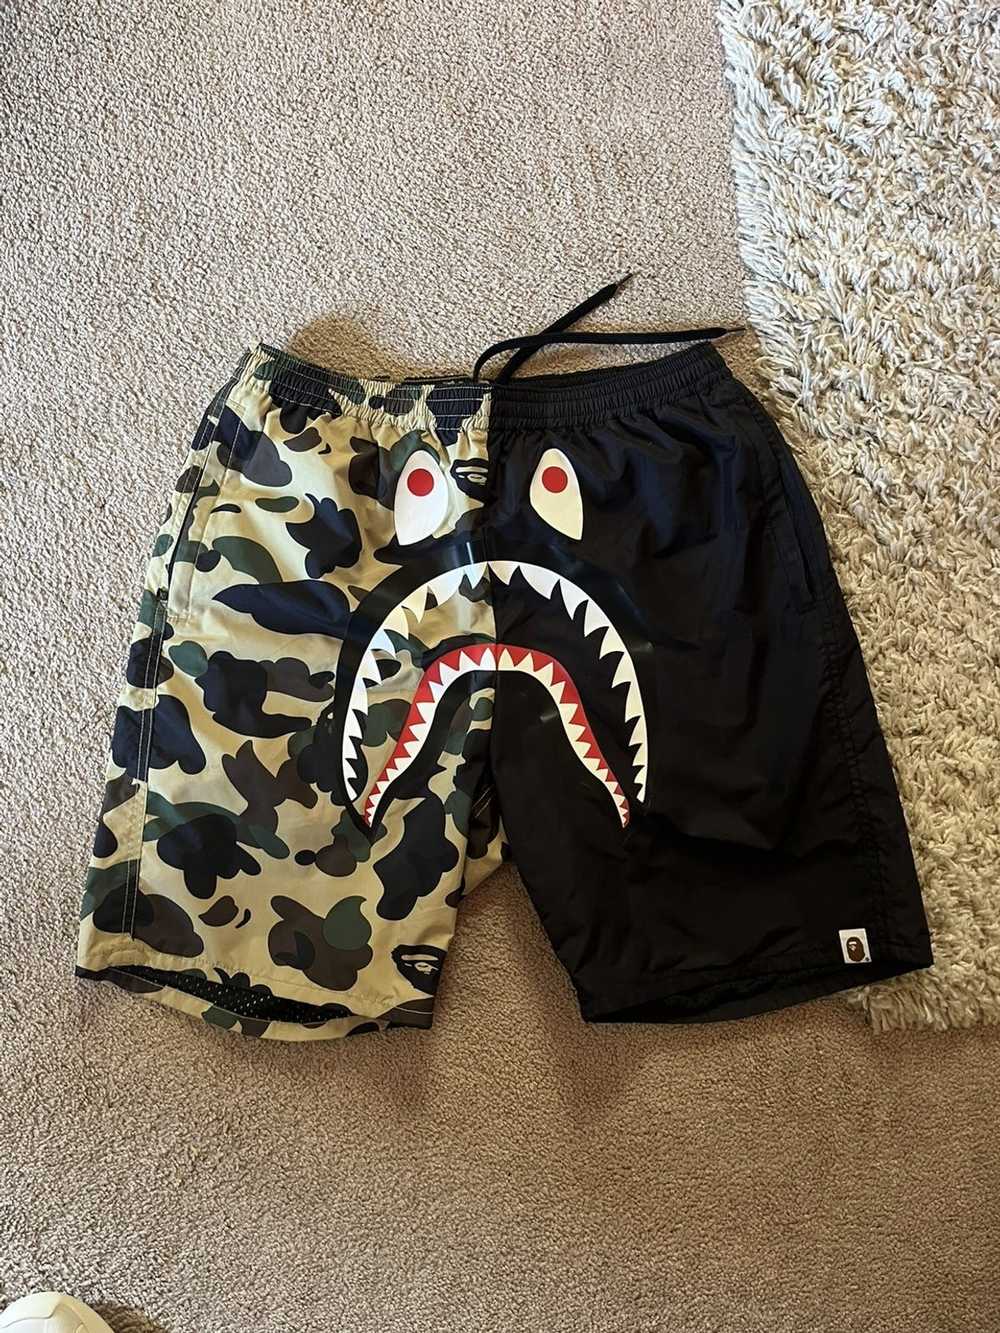 Bape Bape 1st Camo Shark Beach Shorts - image 2